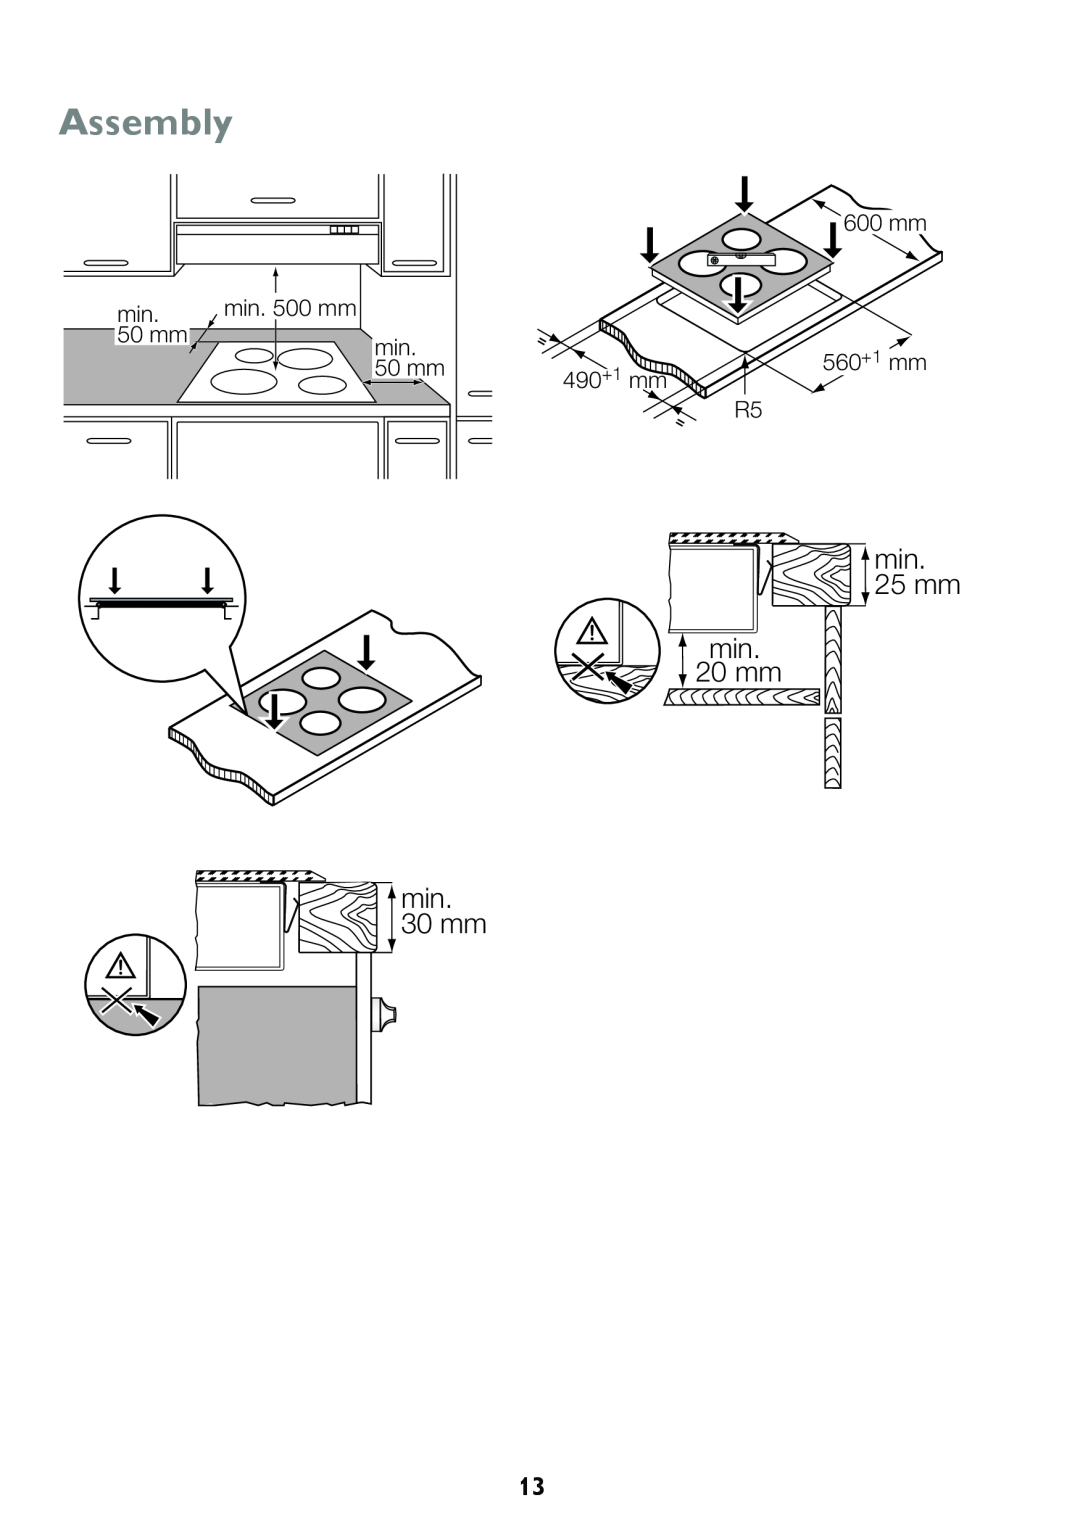 John Lewis JLBICH605 instruction manual Assembly, min. 25 mm min. 20 mm min. 30 mm 